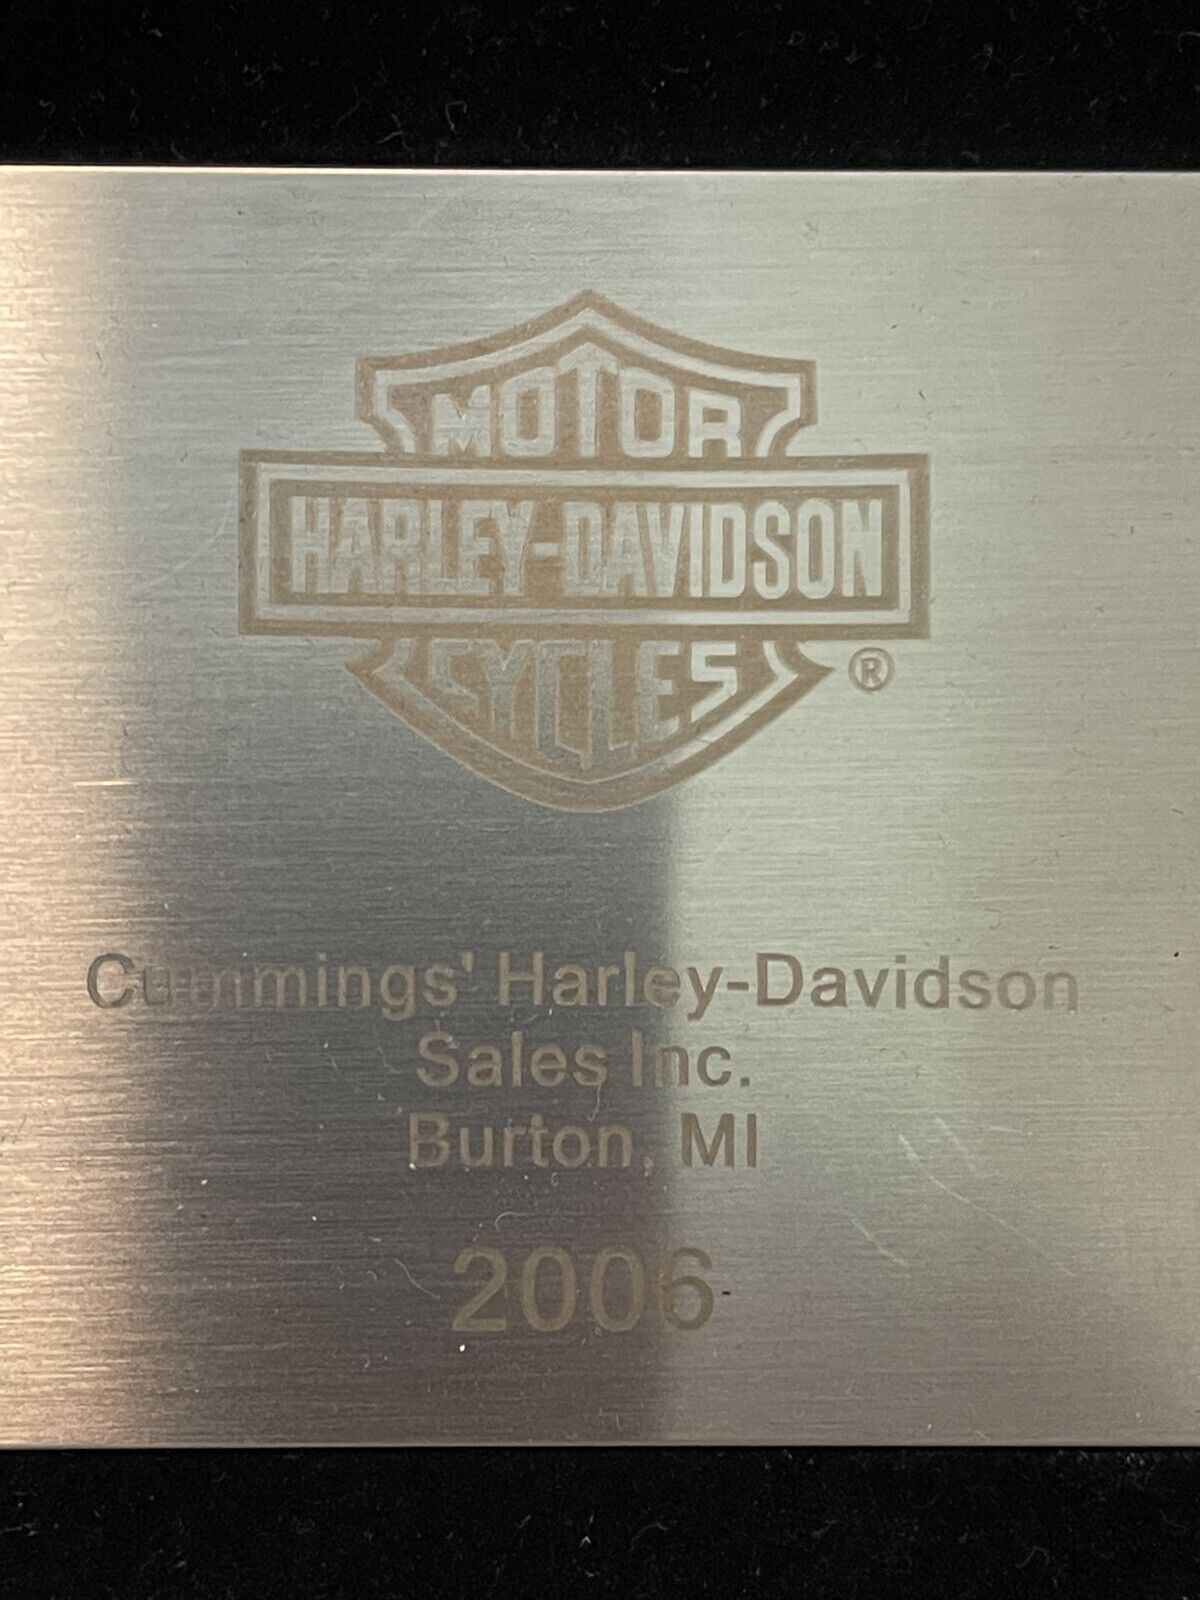 Harley Davidson 2006 Mini Gas Tank Set Shadow Box Display Ornament Collectibles